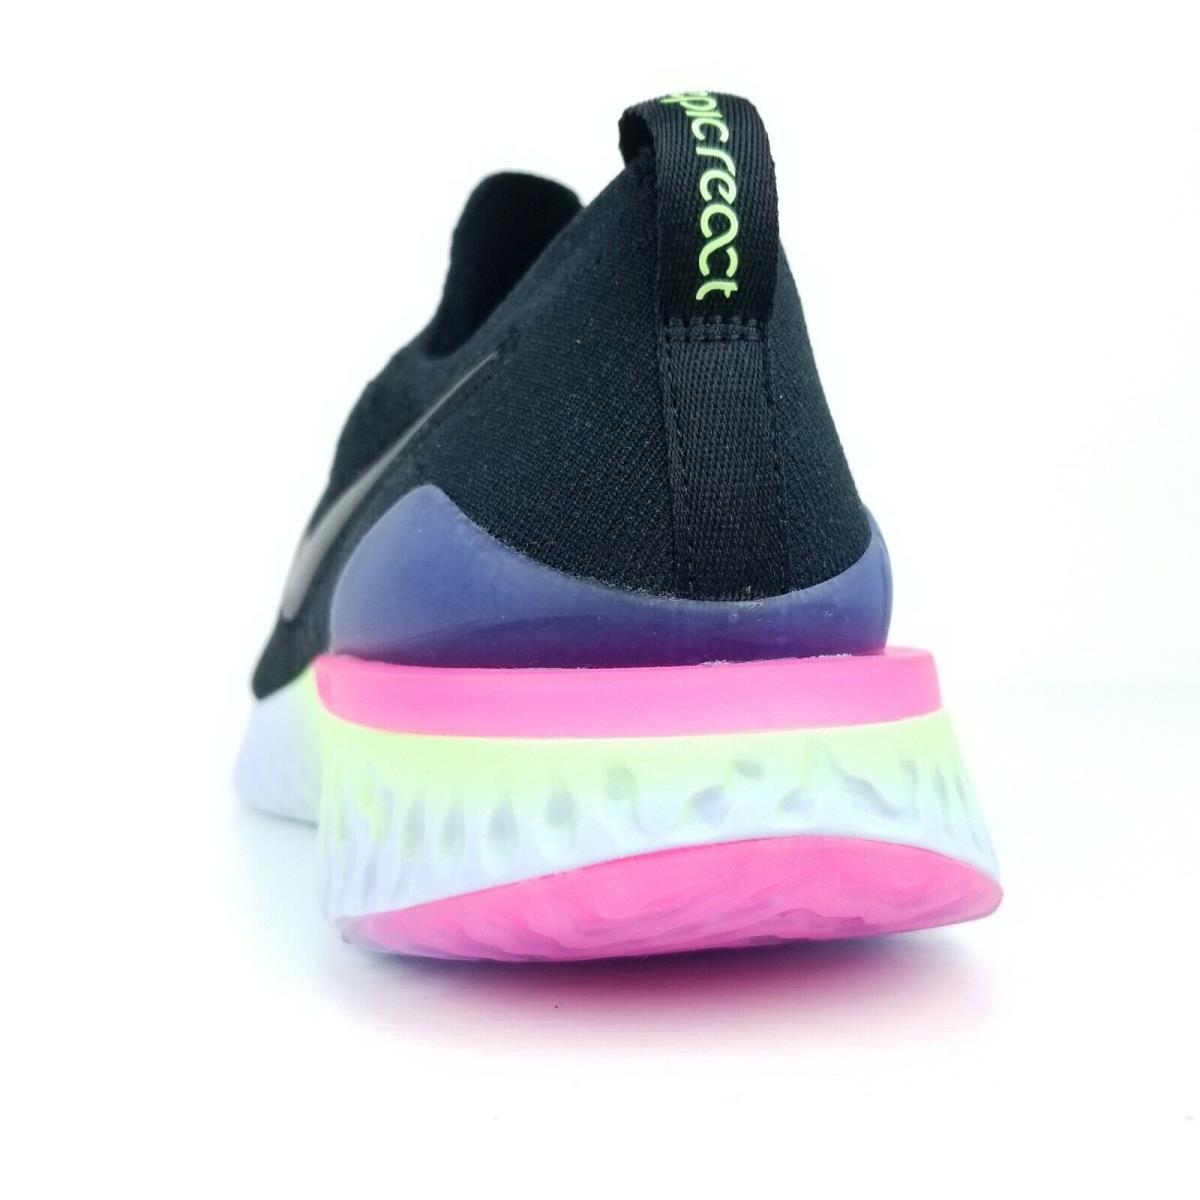 Nike shoes Epic React Flyknit - Black Lime Multi 4